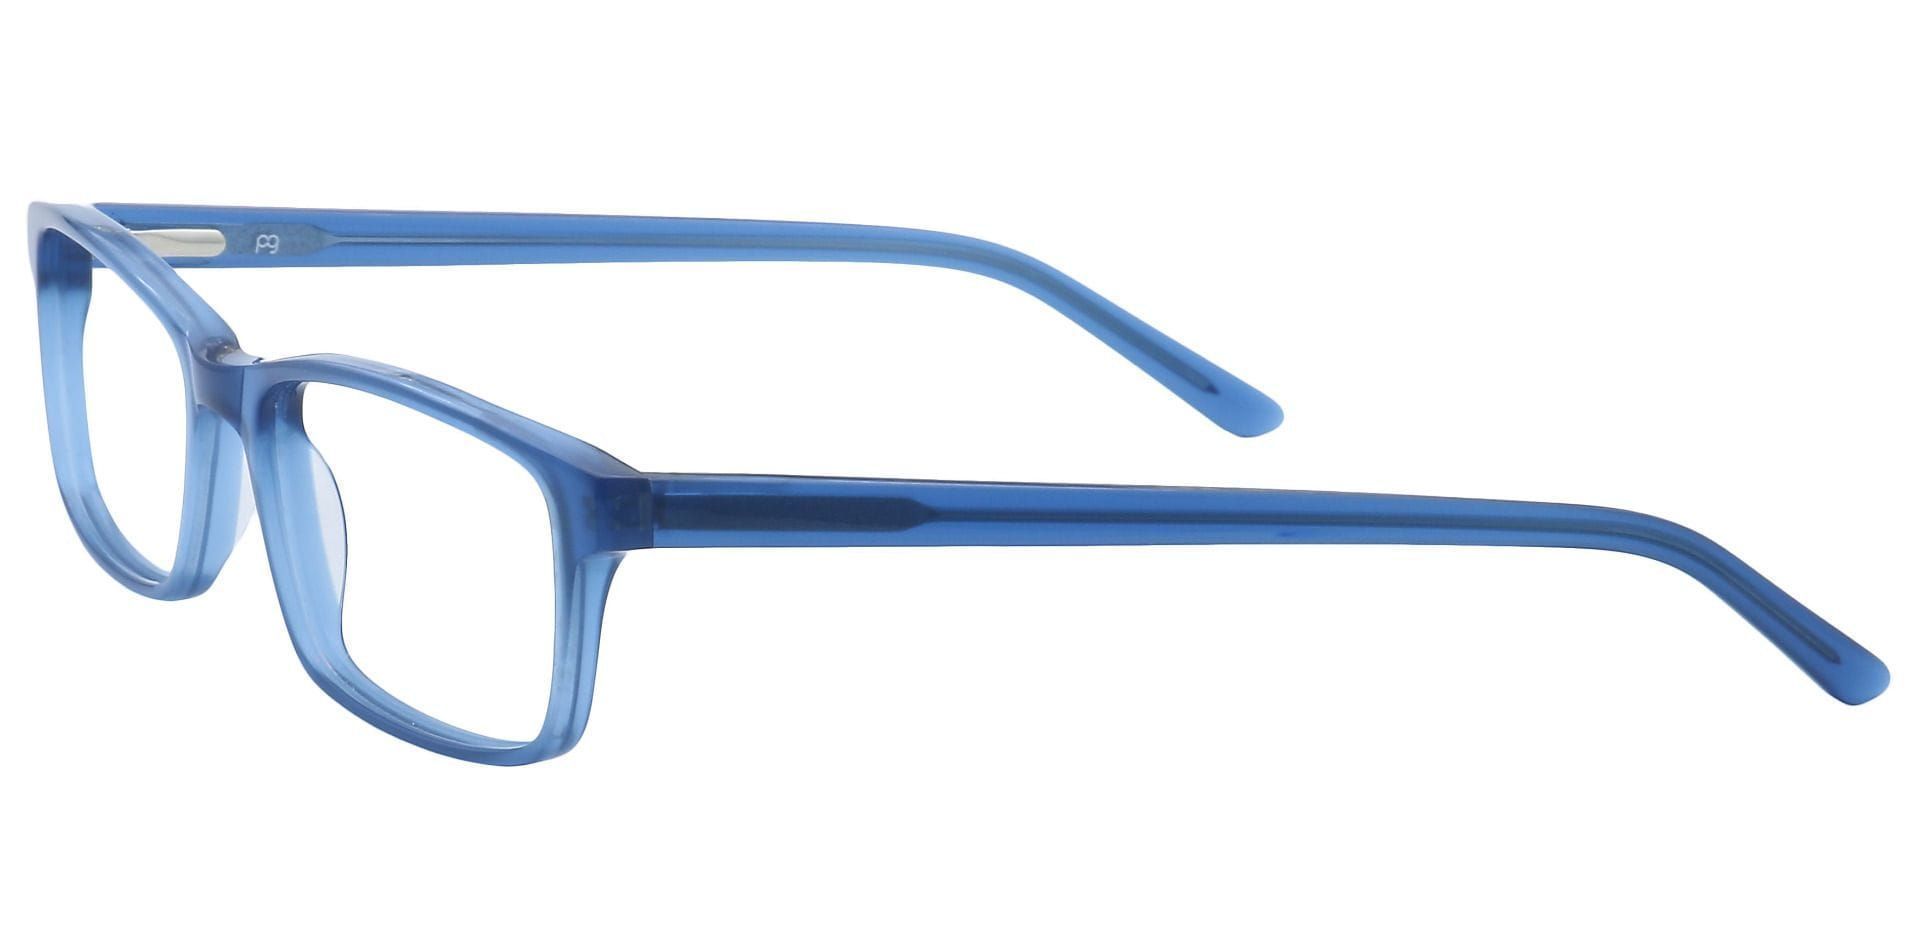 Suave Rectangle Progressive Glasses - Blue